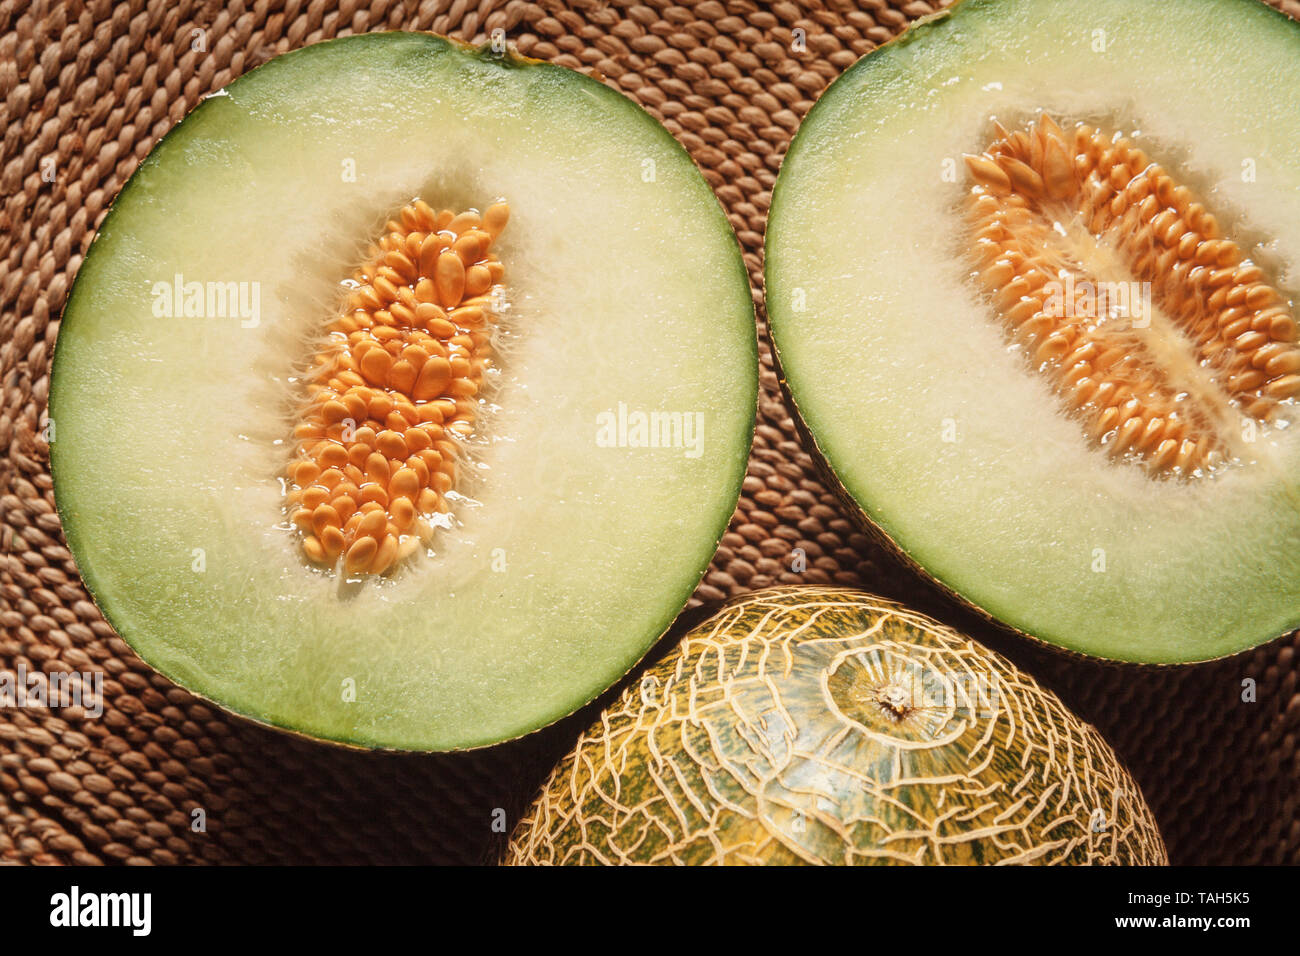 Galia melon, Cucumis melo, cut section showing flesh & seeds Stock Photo